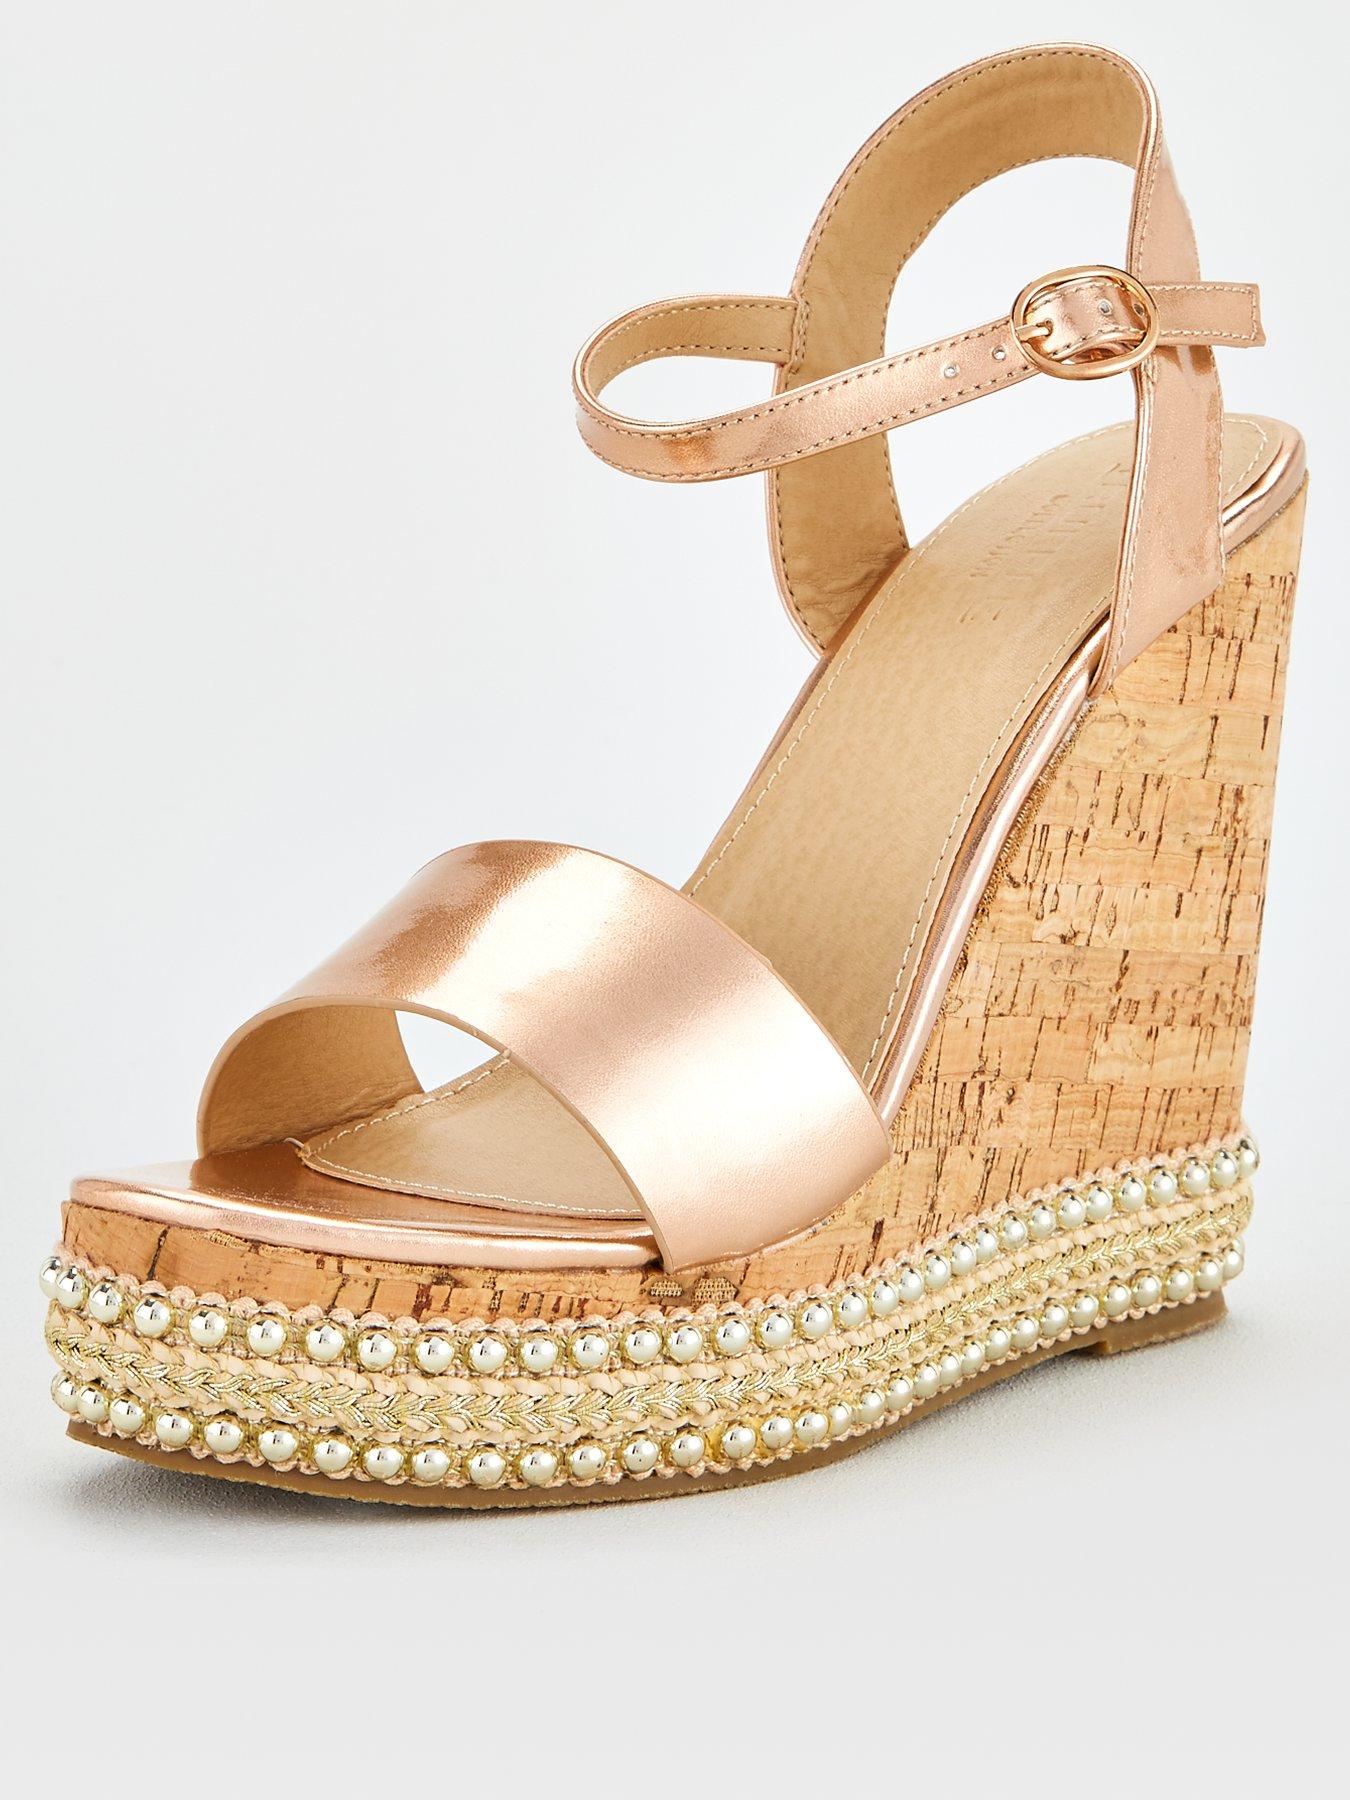 gold high heels ireland